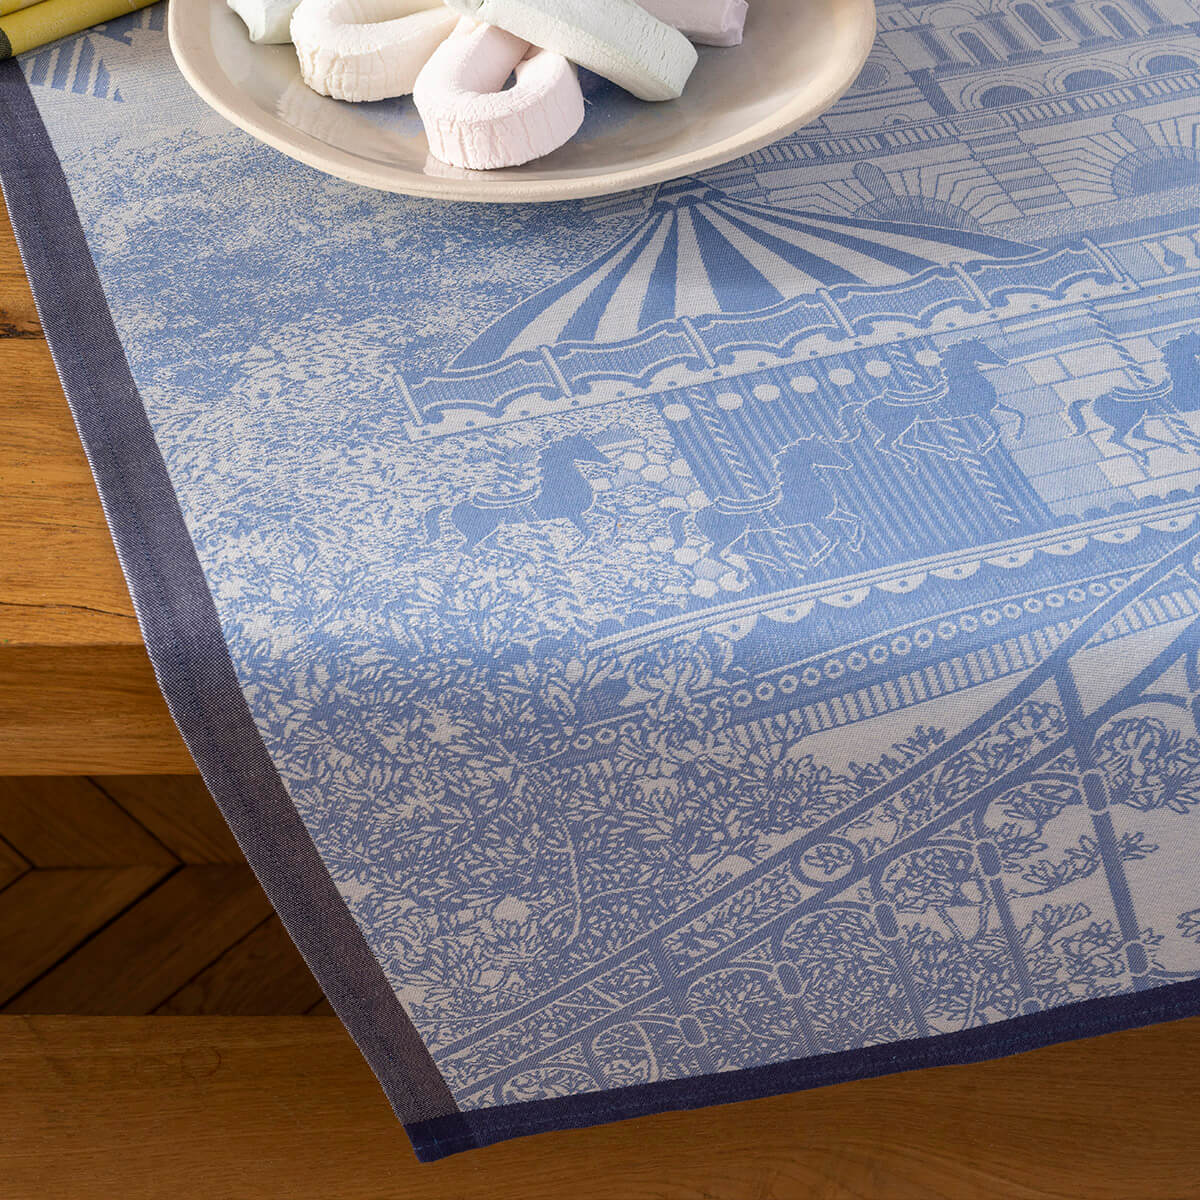 PROMENADE PARISIENNE TEA TOWEL BLUE - Alternate View - Le jacquard francais at Fig Linens and Home